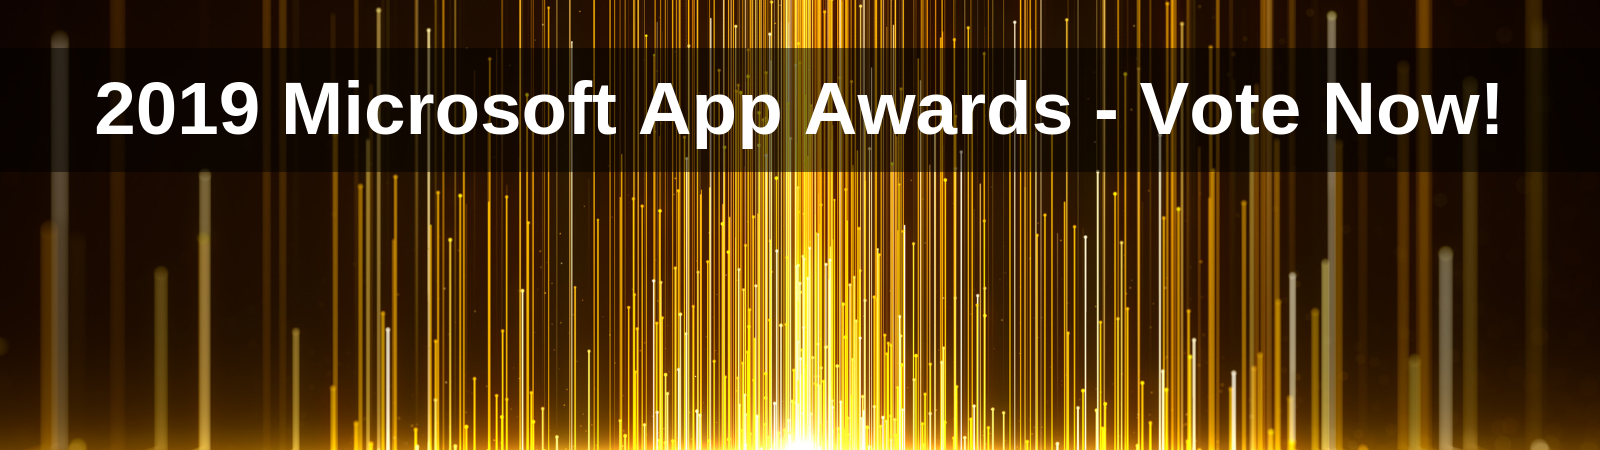 2019 Microsoft App Awards